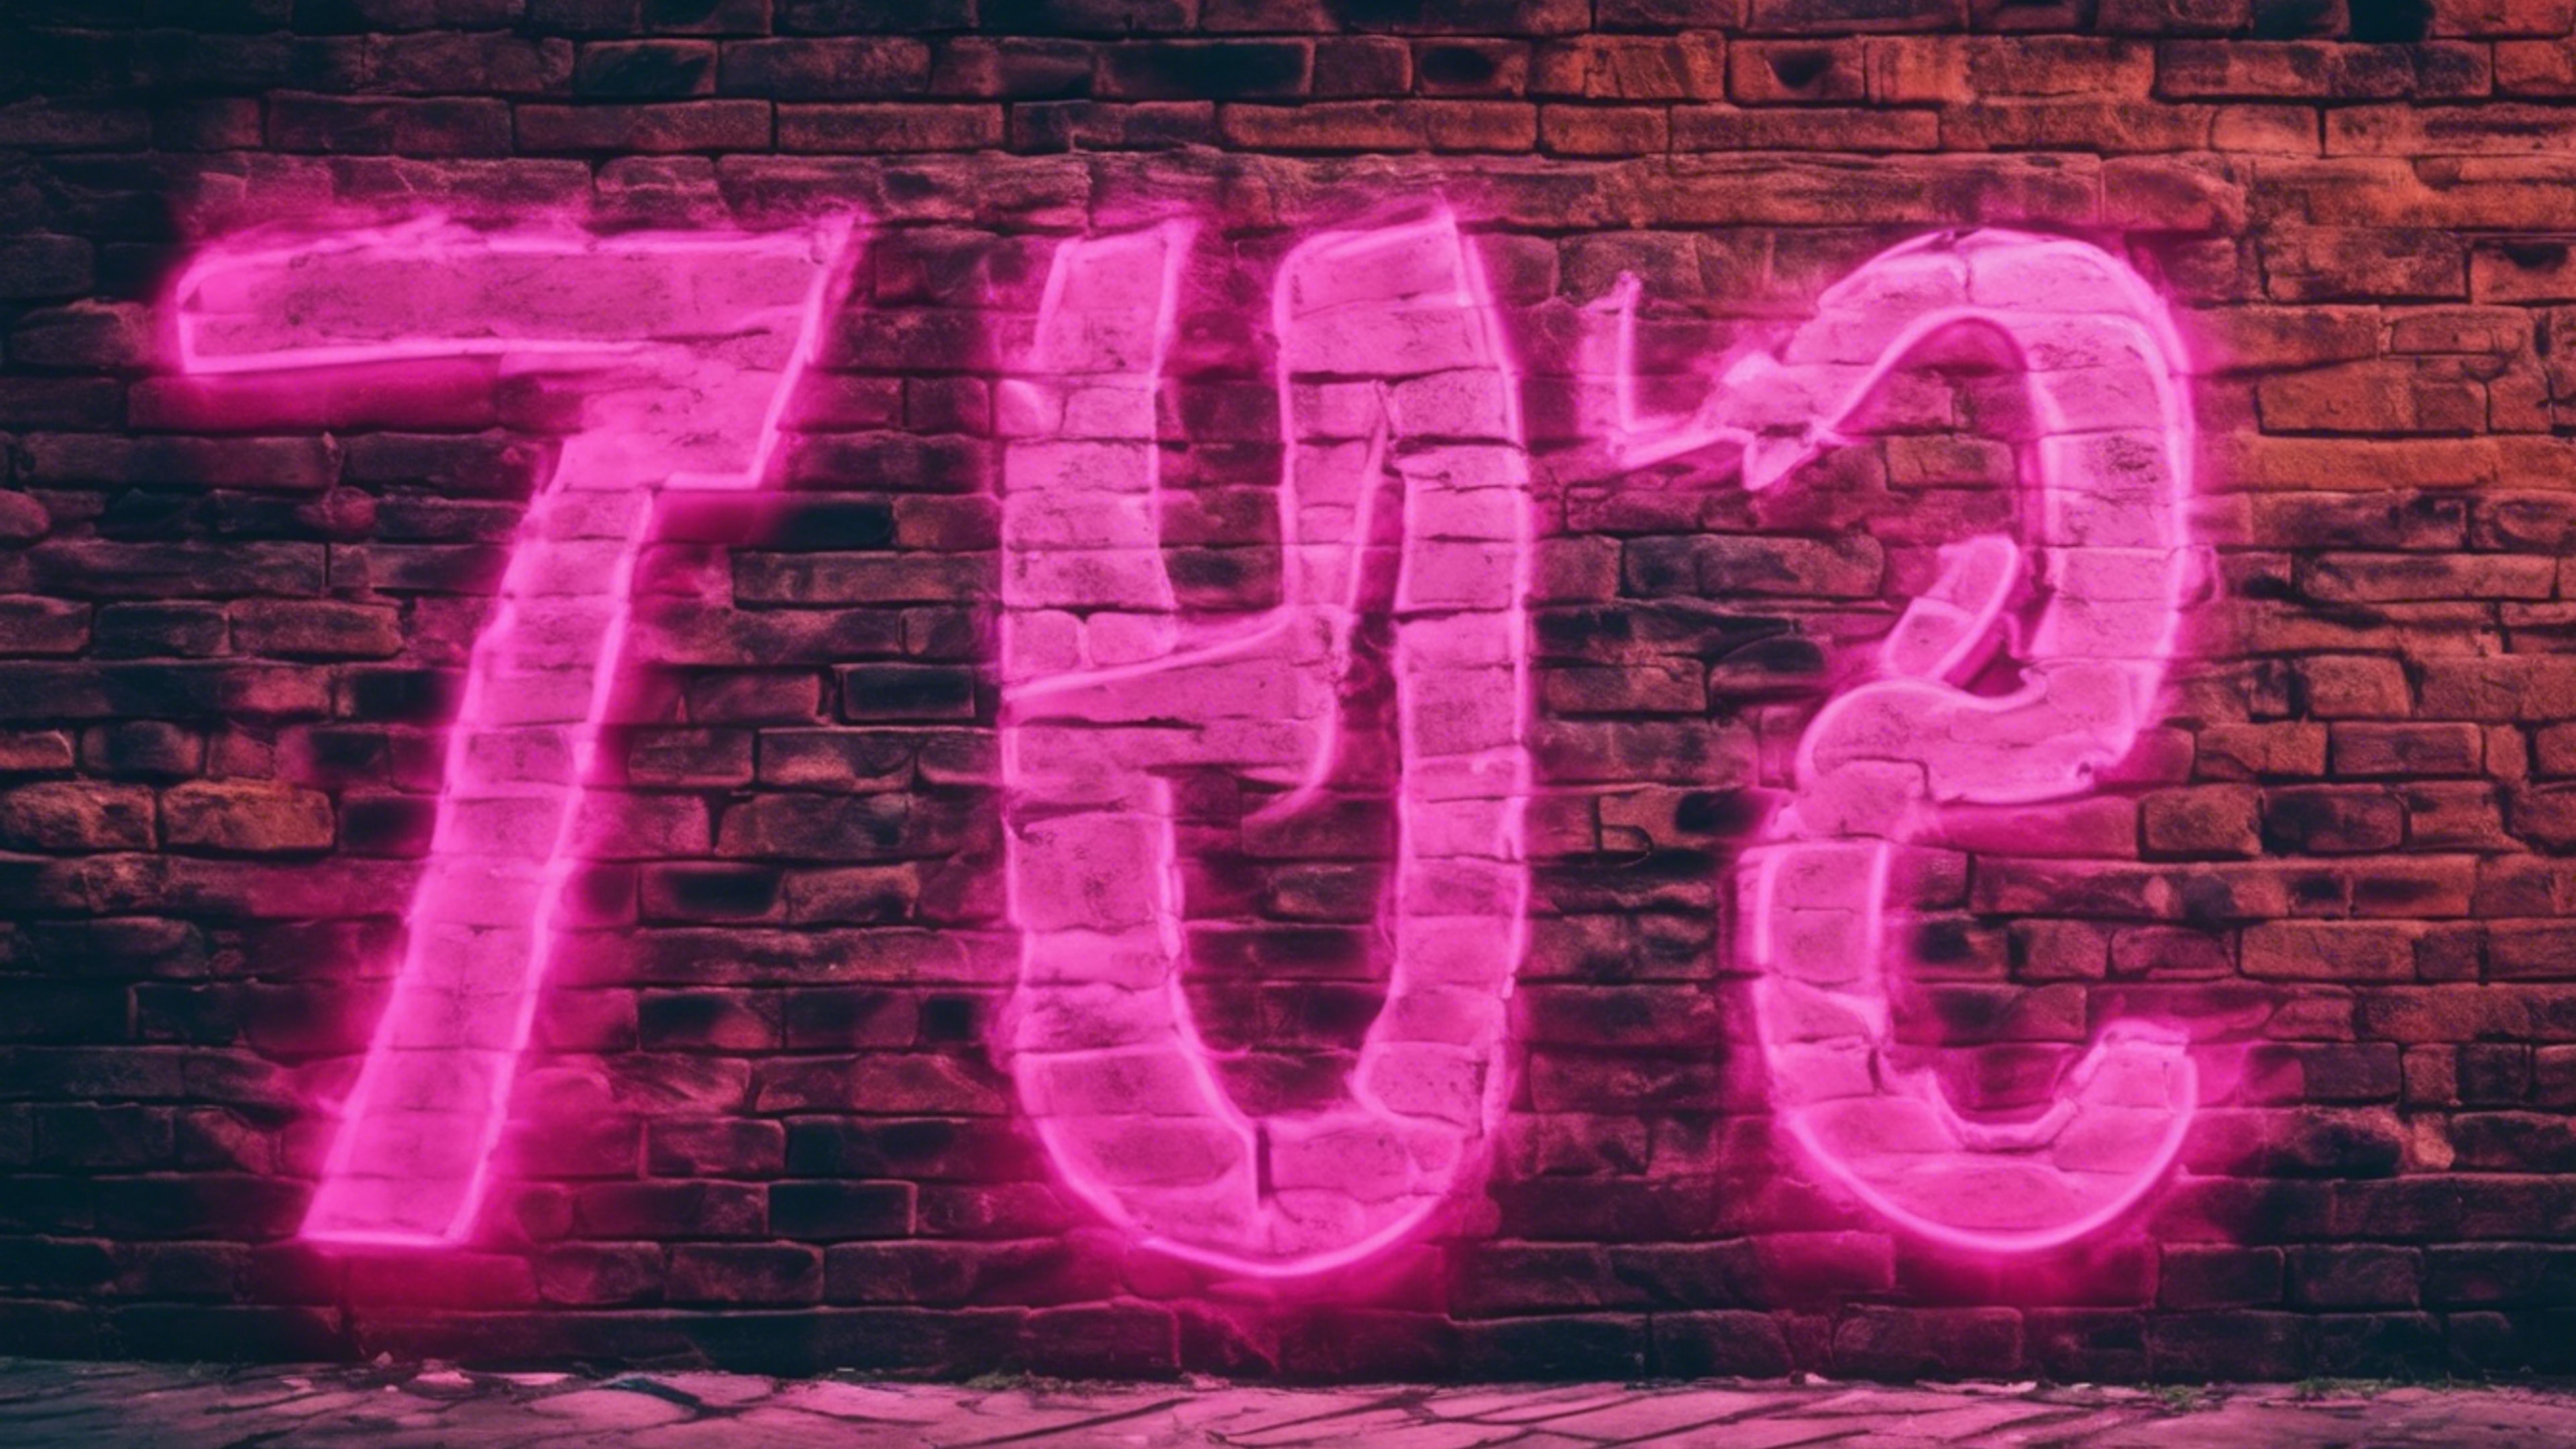 A bright neon pink graffiti on an old brick wall in an urban setting. Tapetai[f64c7f440a704c87afc0]